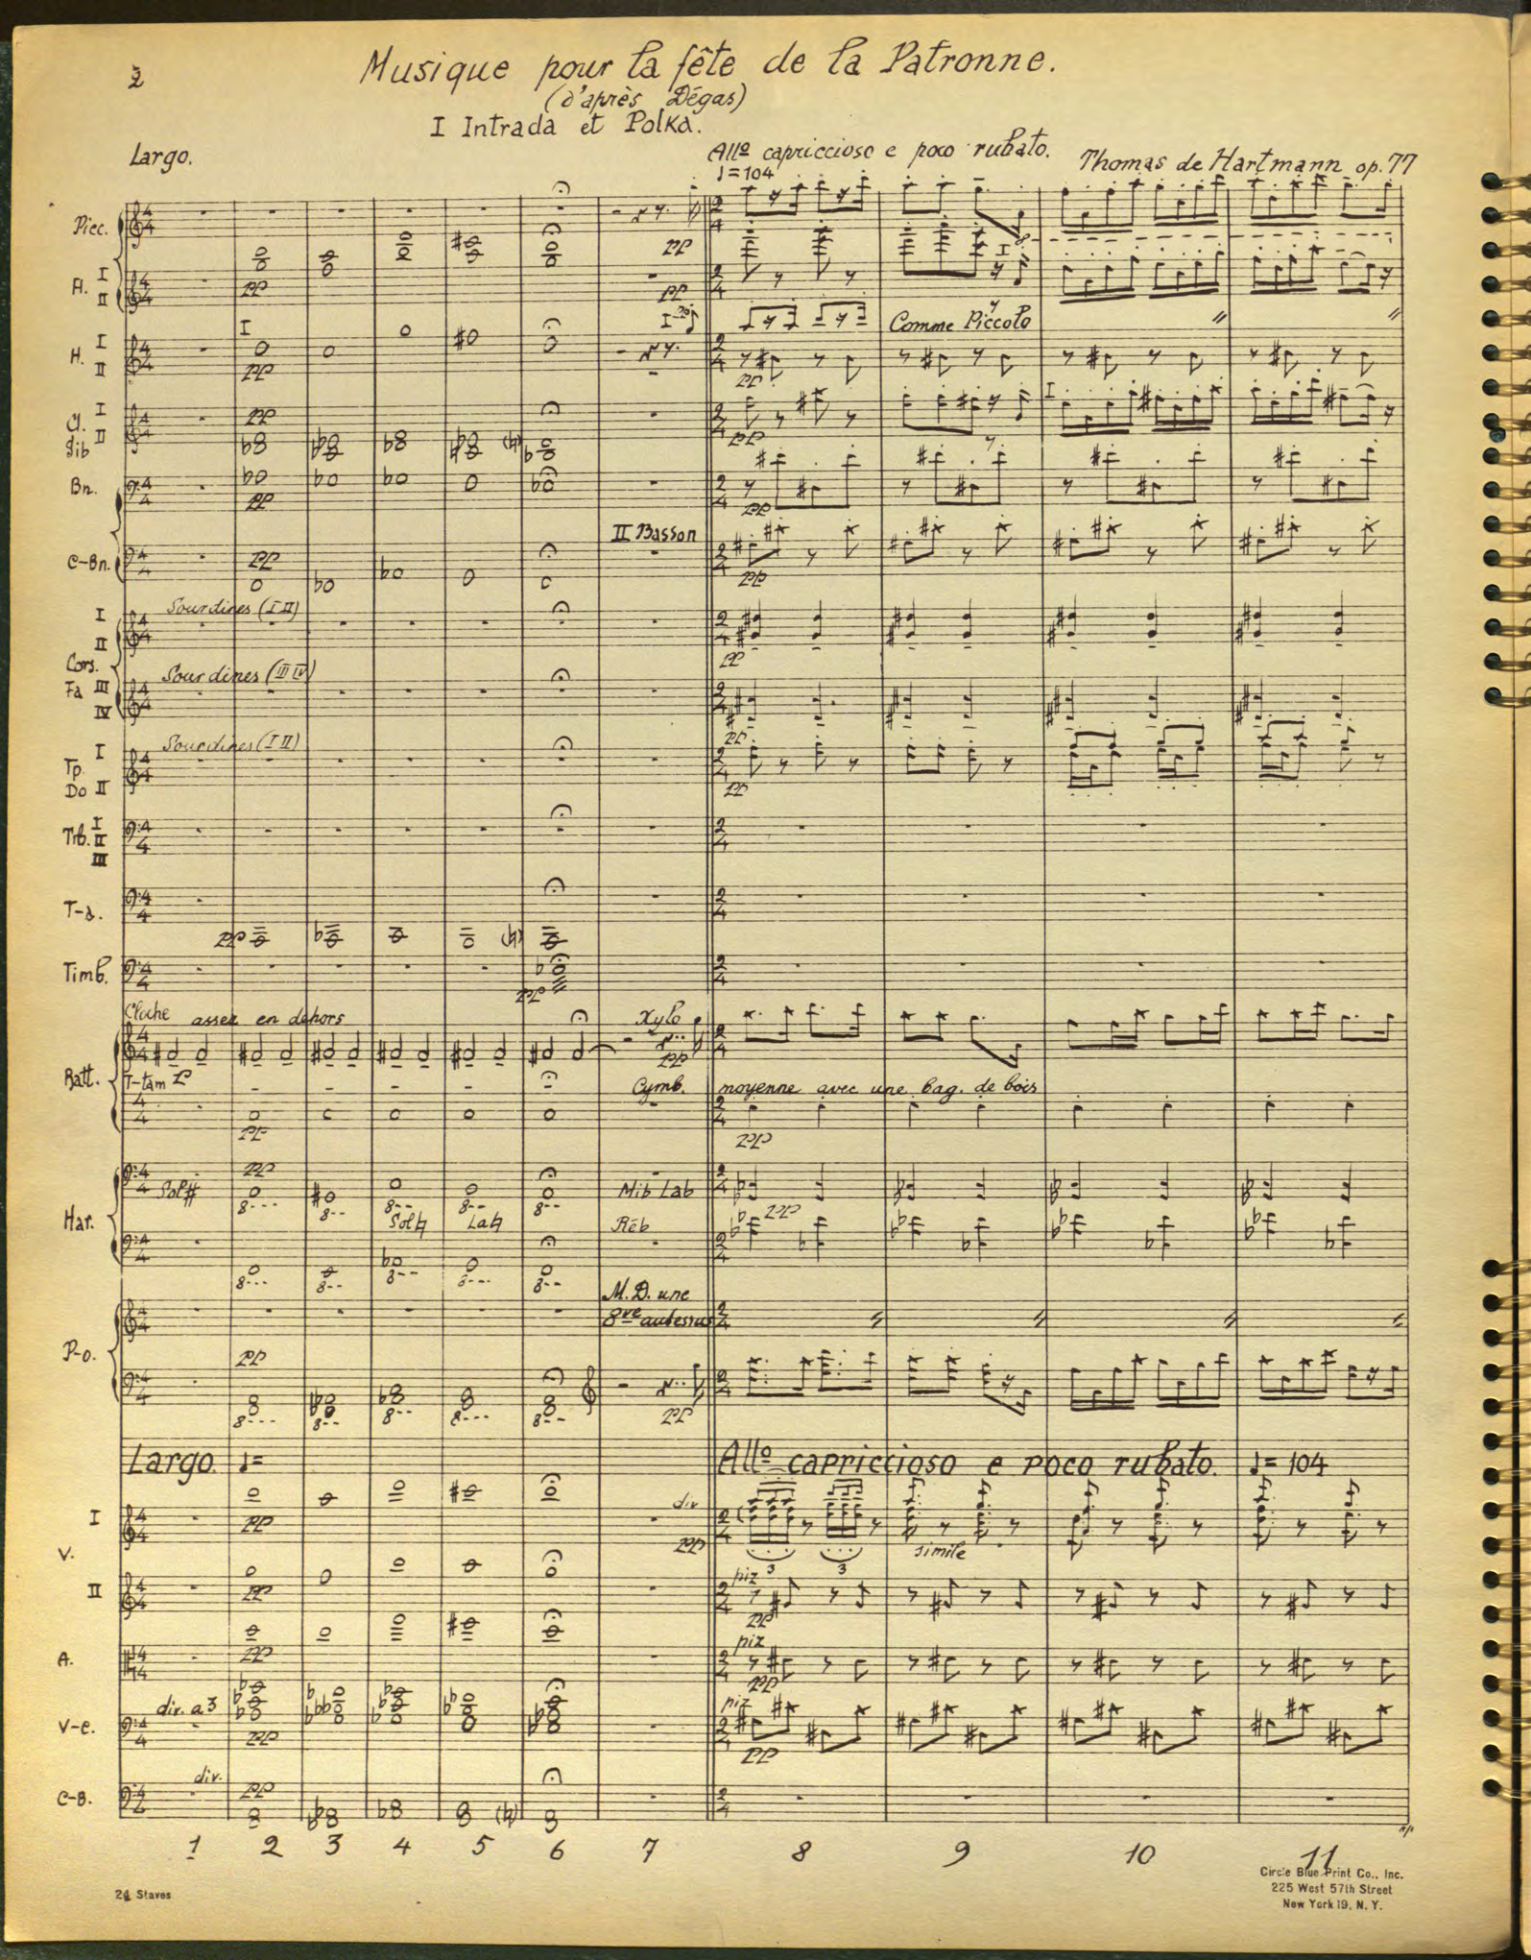 Publication of de Hartmann’s Music